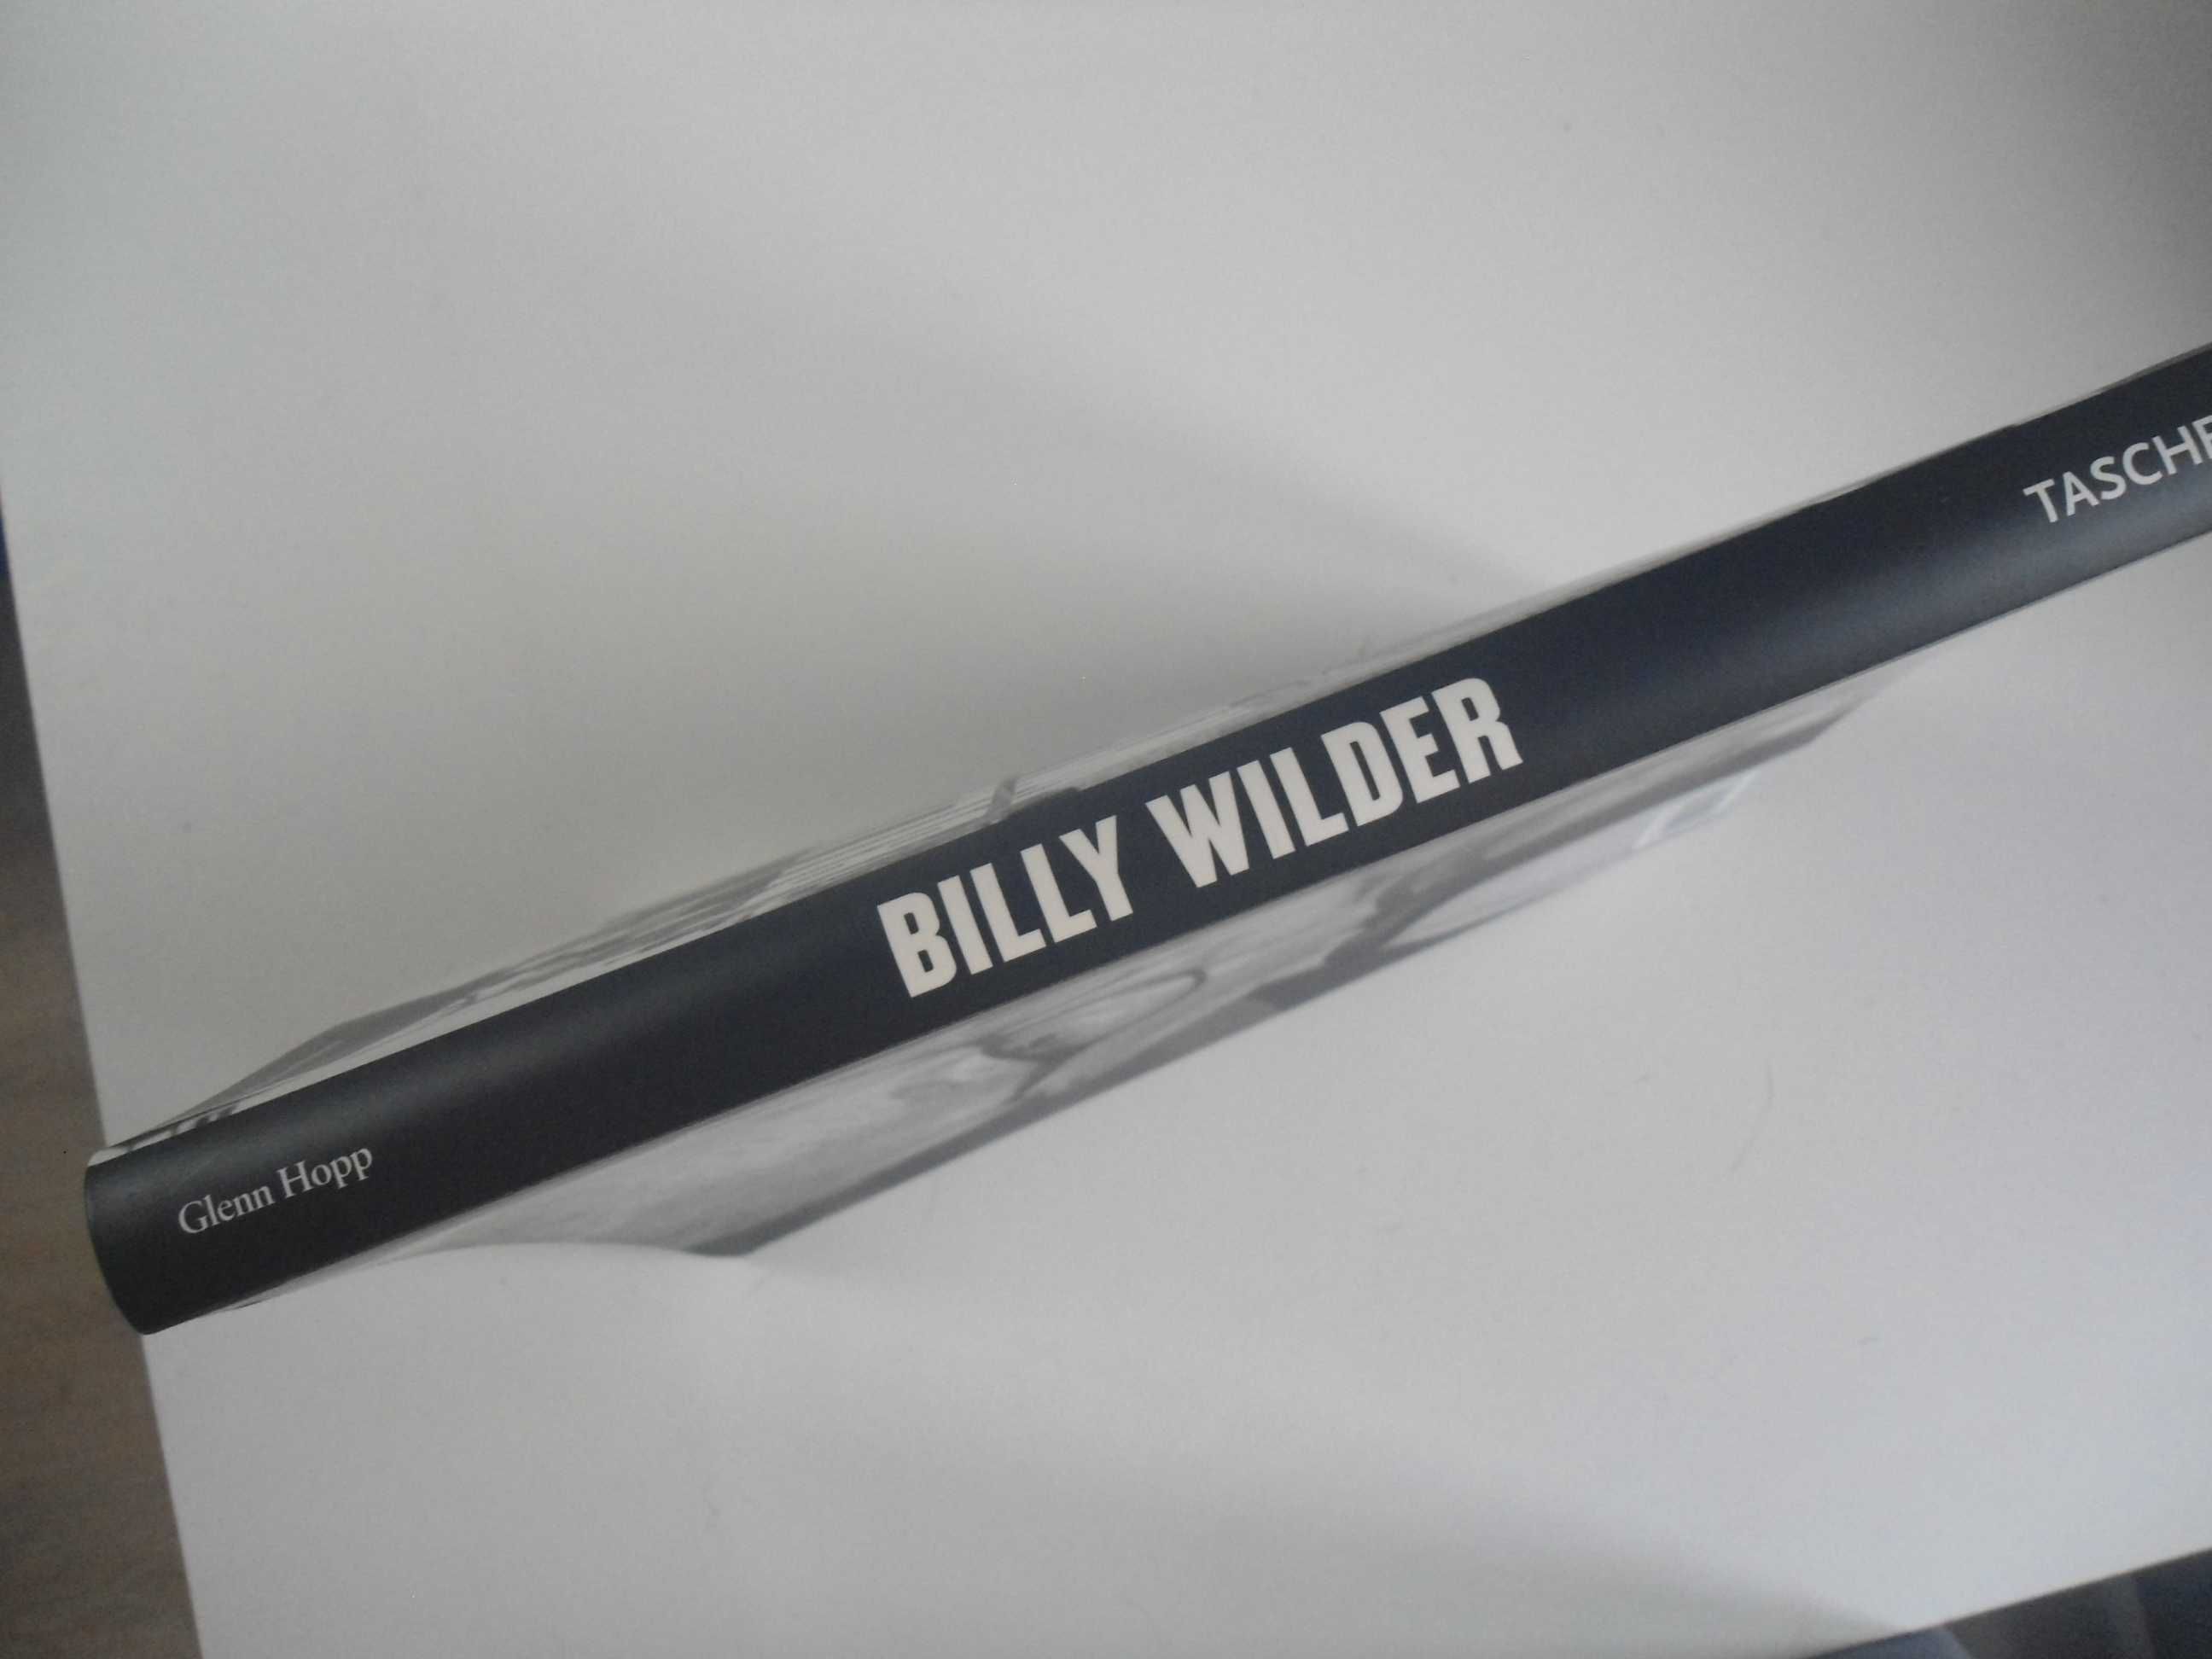 Billy Wilder - A Filmografia Completa por Glenn Hopp